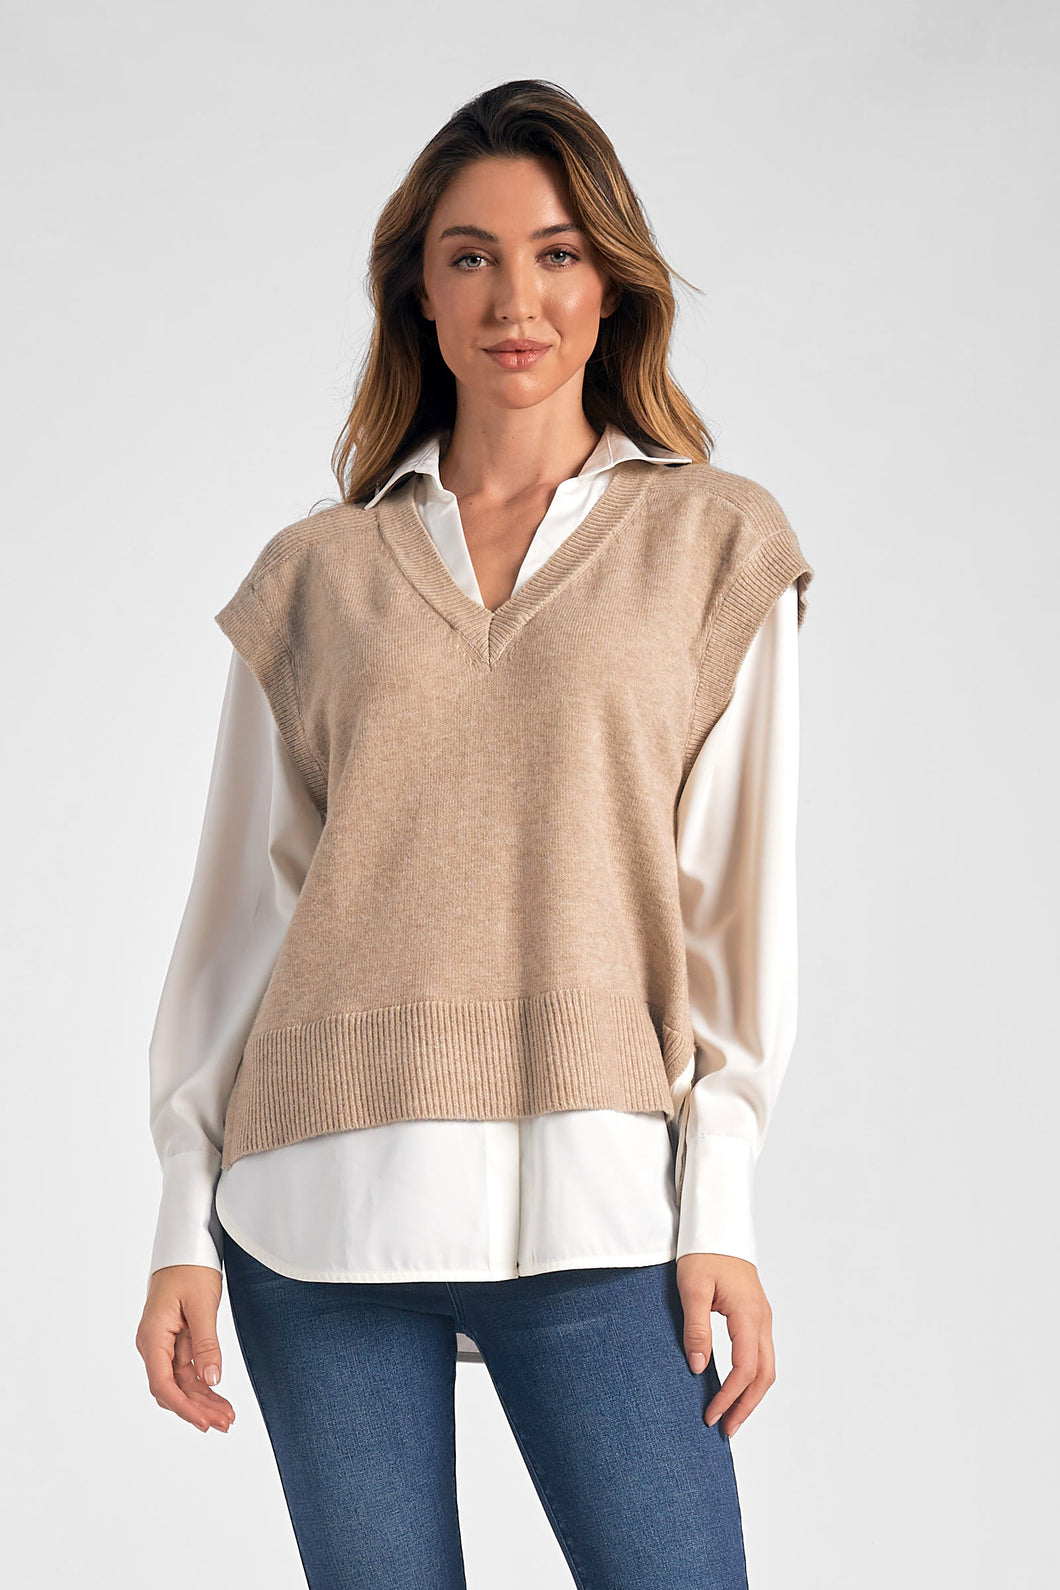 Sweater Vest Shirt Combo (more colors)